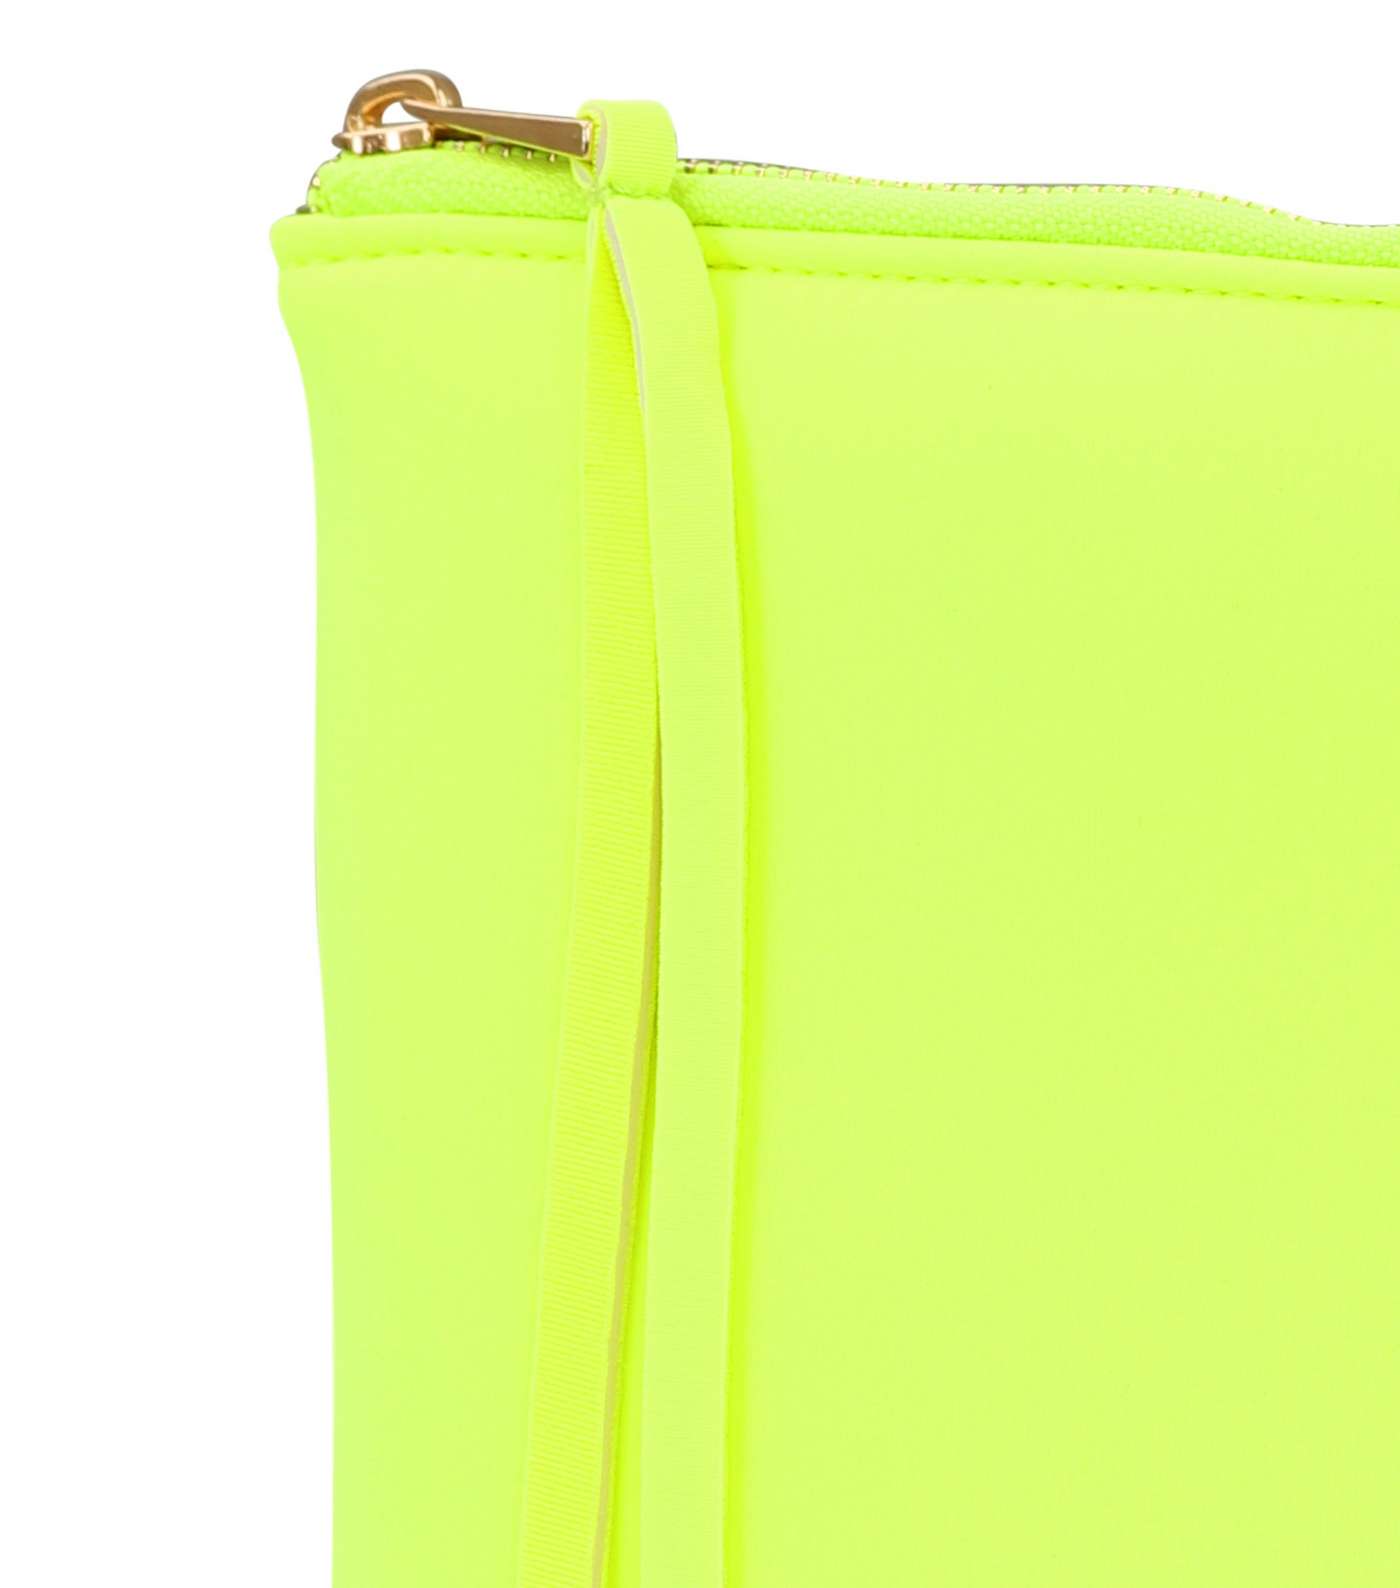 South Beach Yellow Wristlet Clutch Bag Image 3